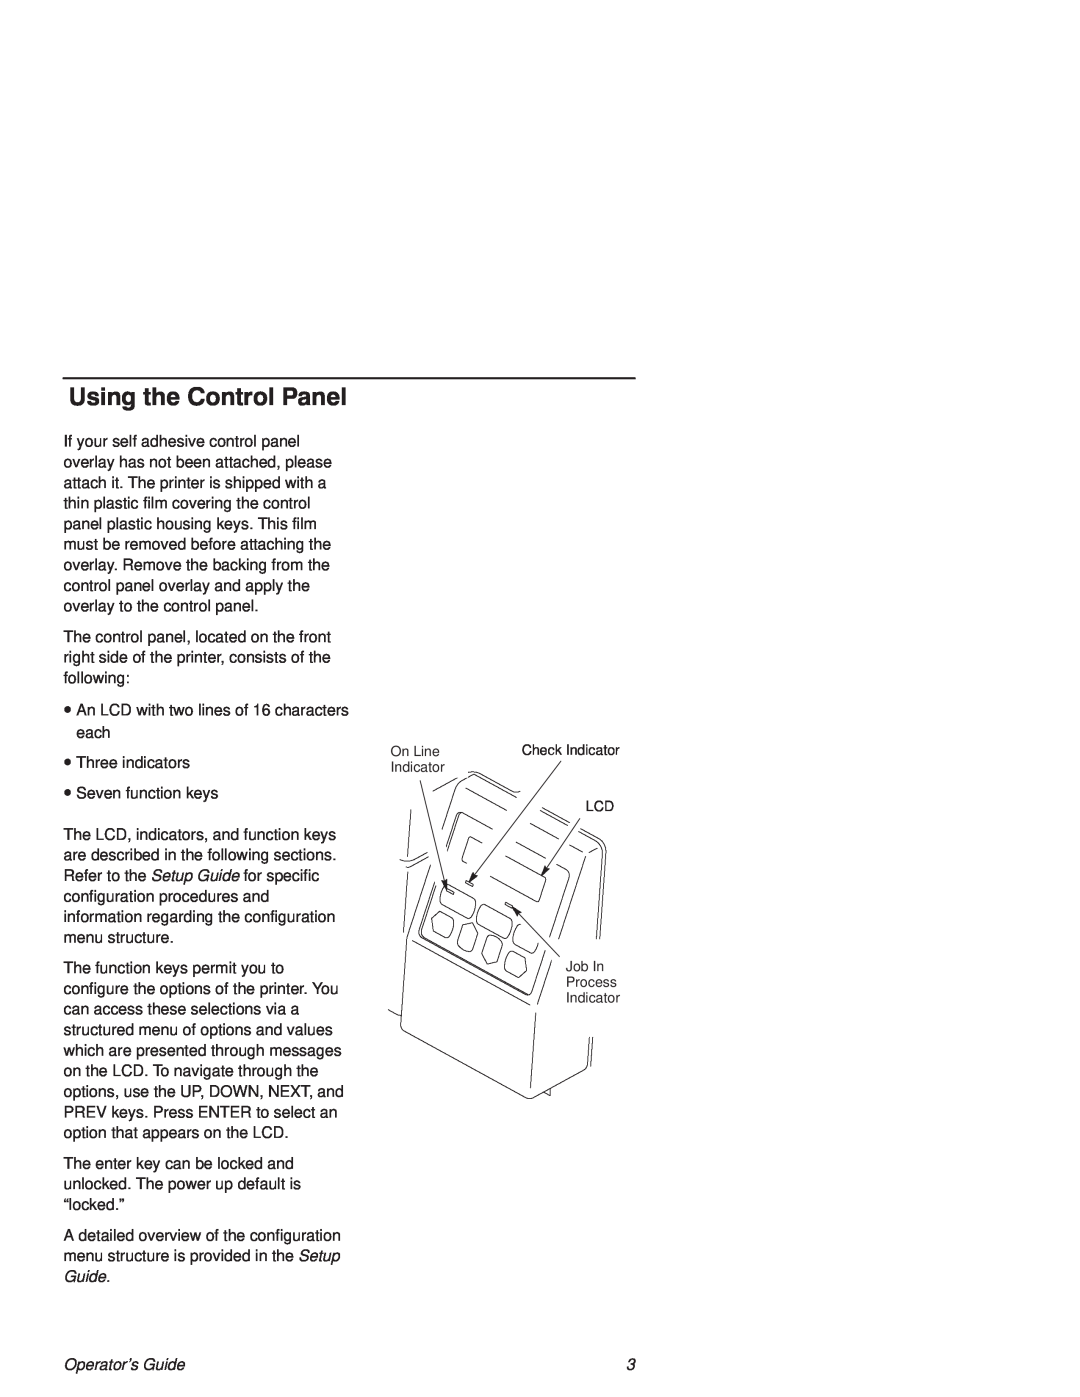 Printronix L1524 manual Using the ontrol Panel, Operators Guide 